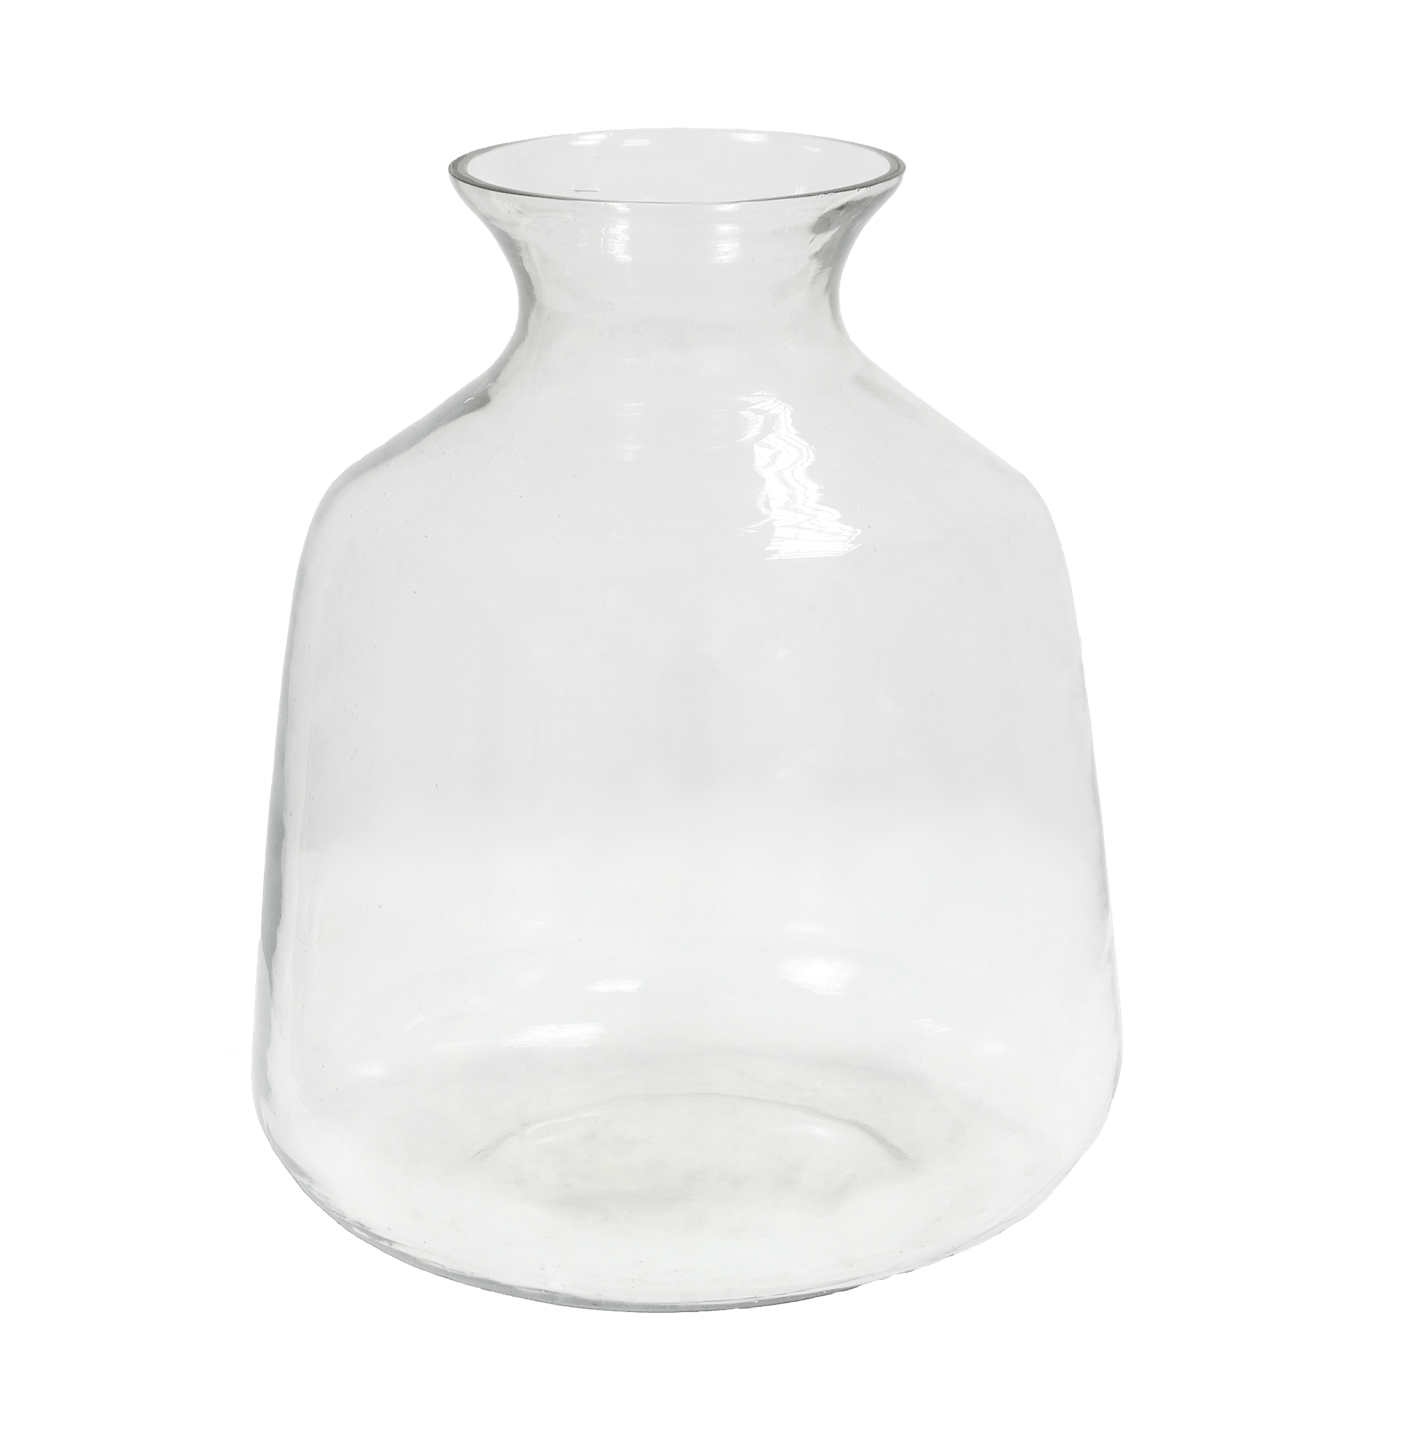 Hydria style glass vase